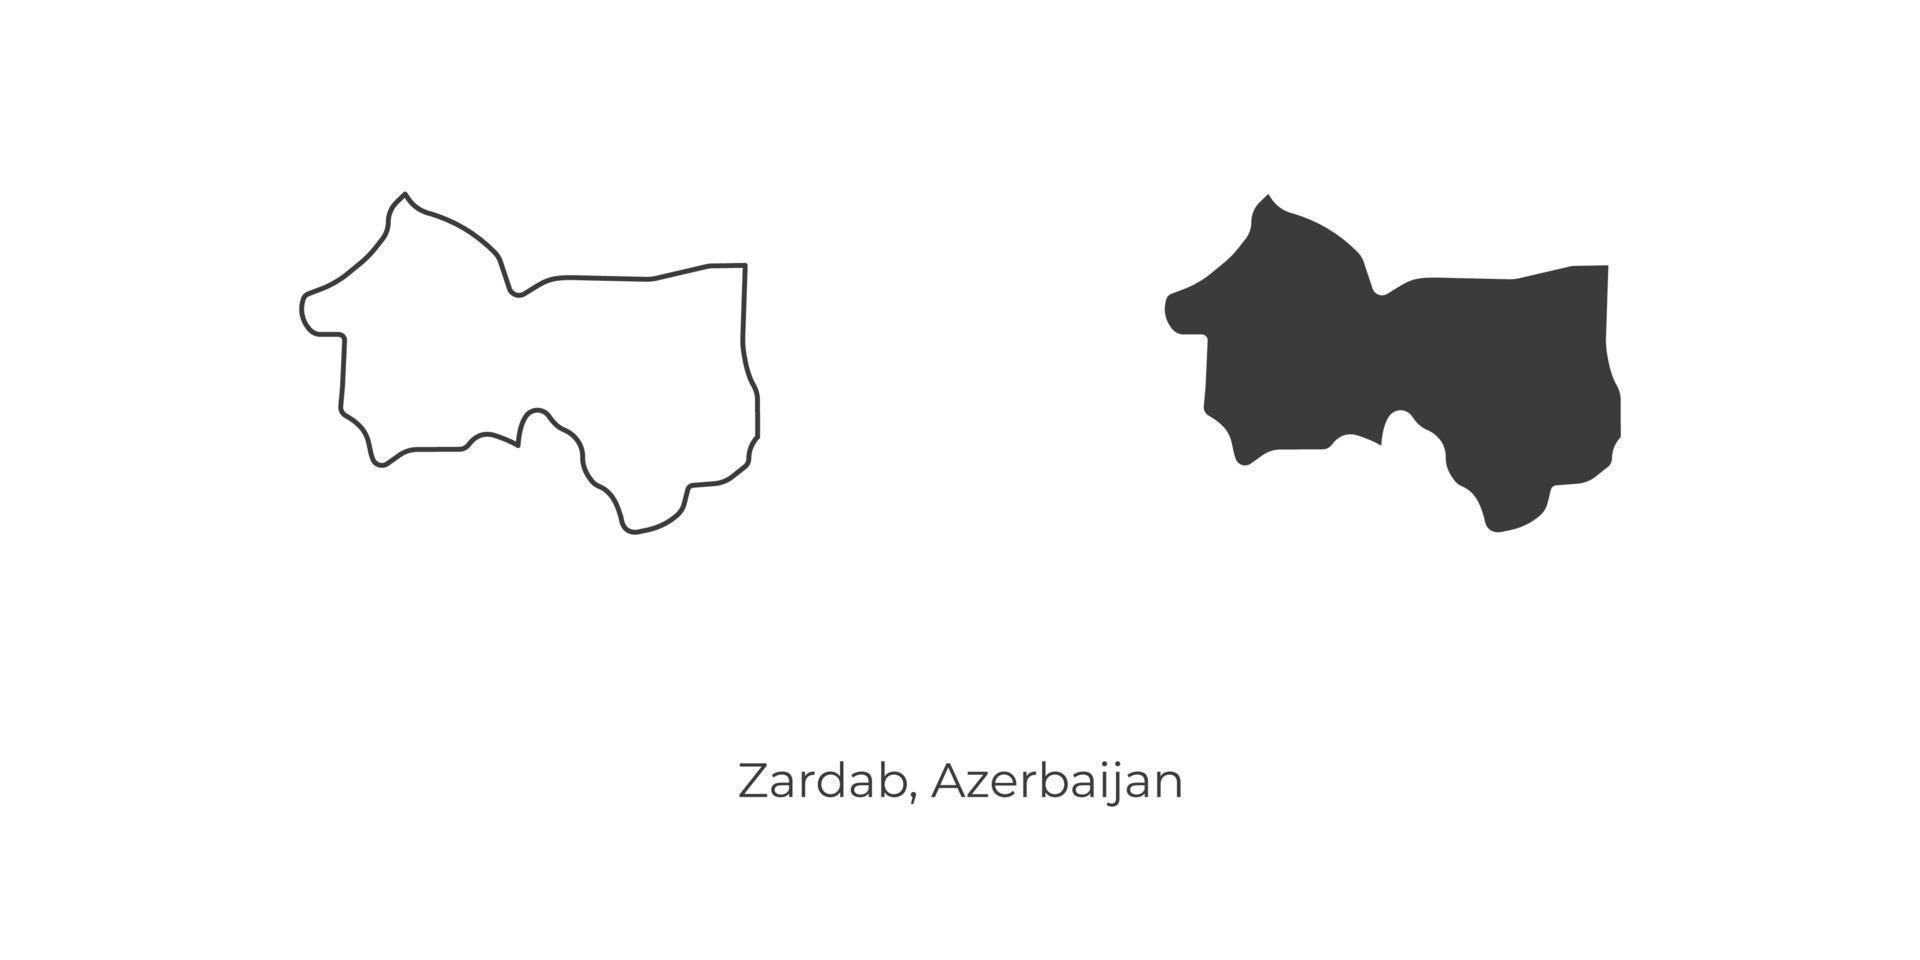 illustration vectorielle simple de la carte de zardab, azerbaïdjan. vecteur